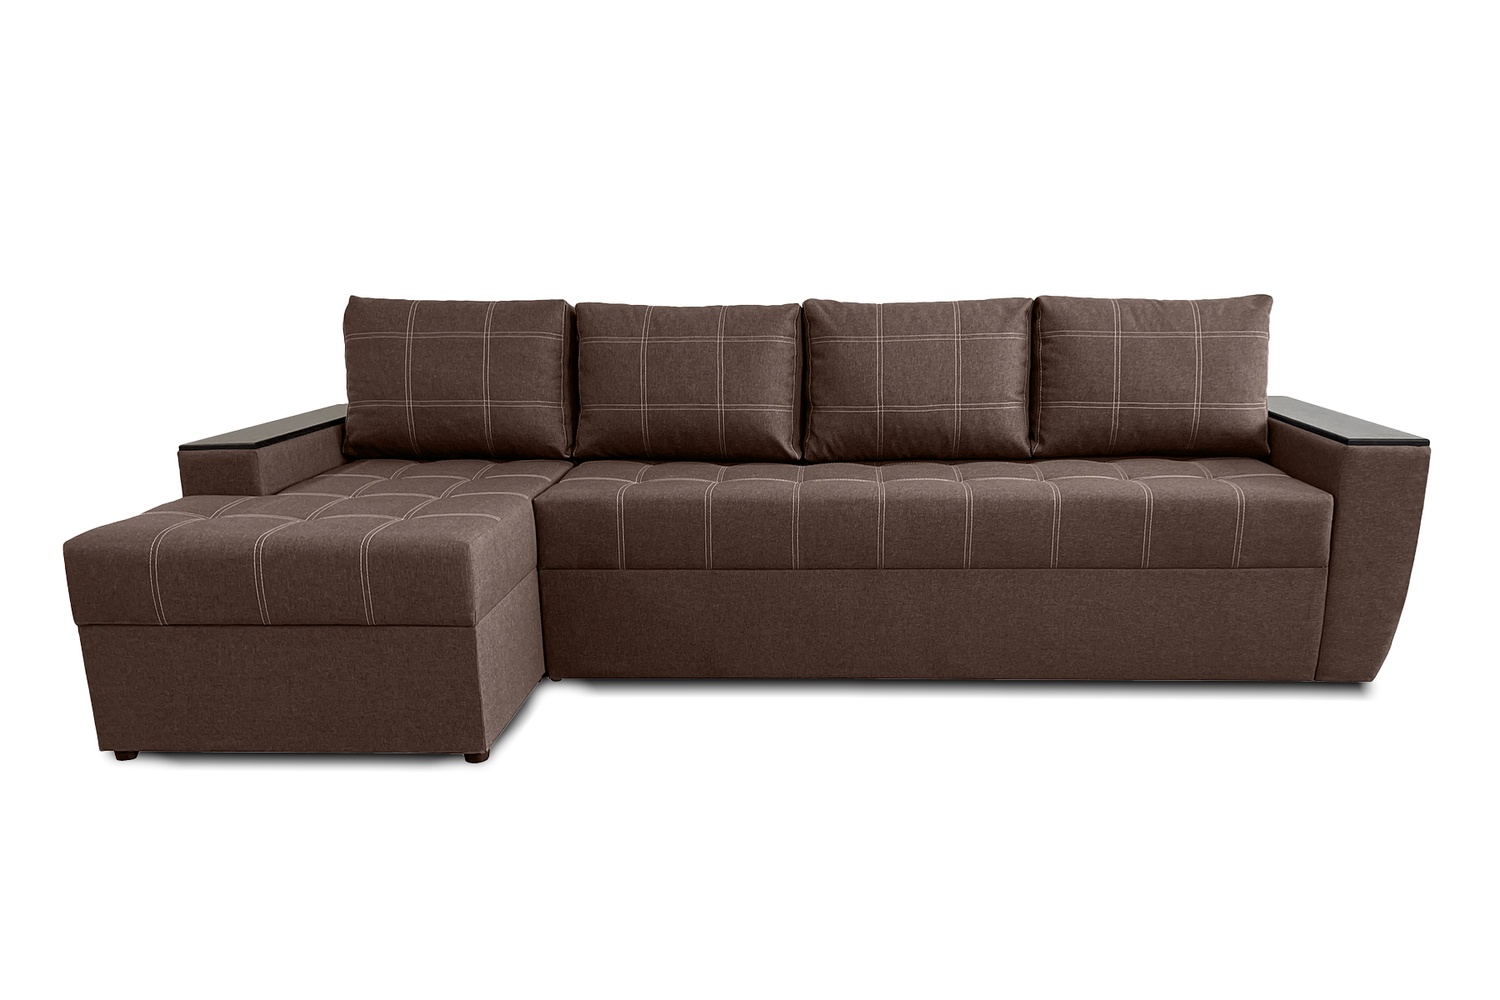 Угловой диван Наполи Плюс (бежевый, 300х150 см) IMI knplp-sn-21 фото